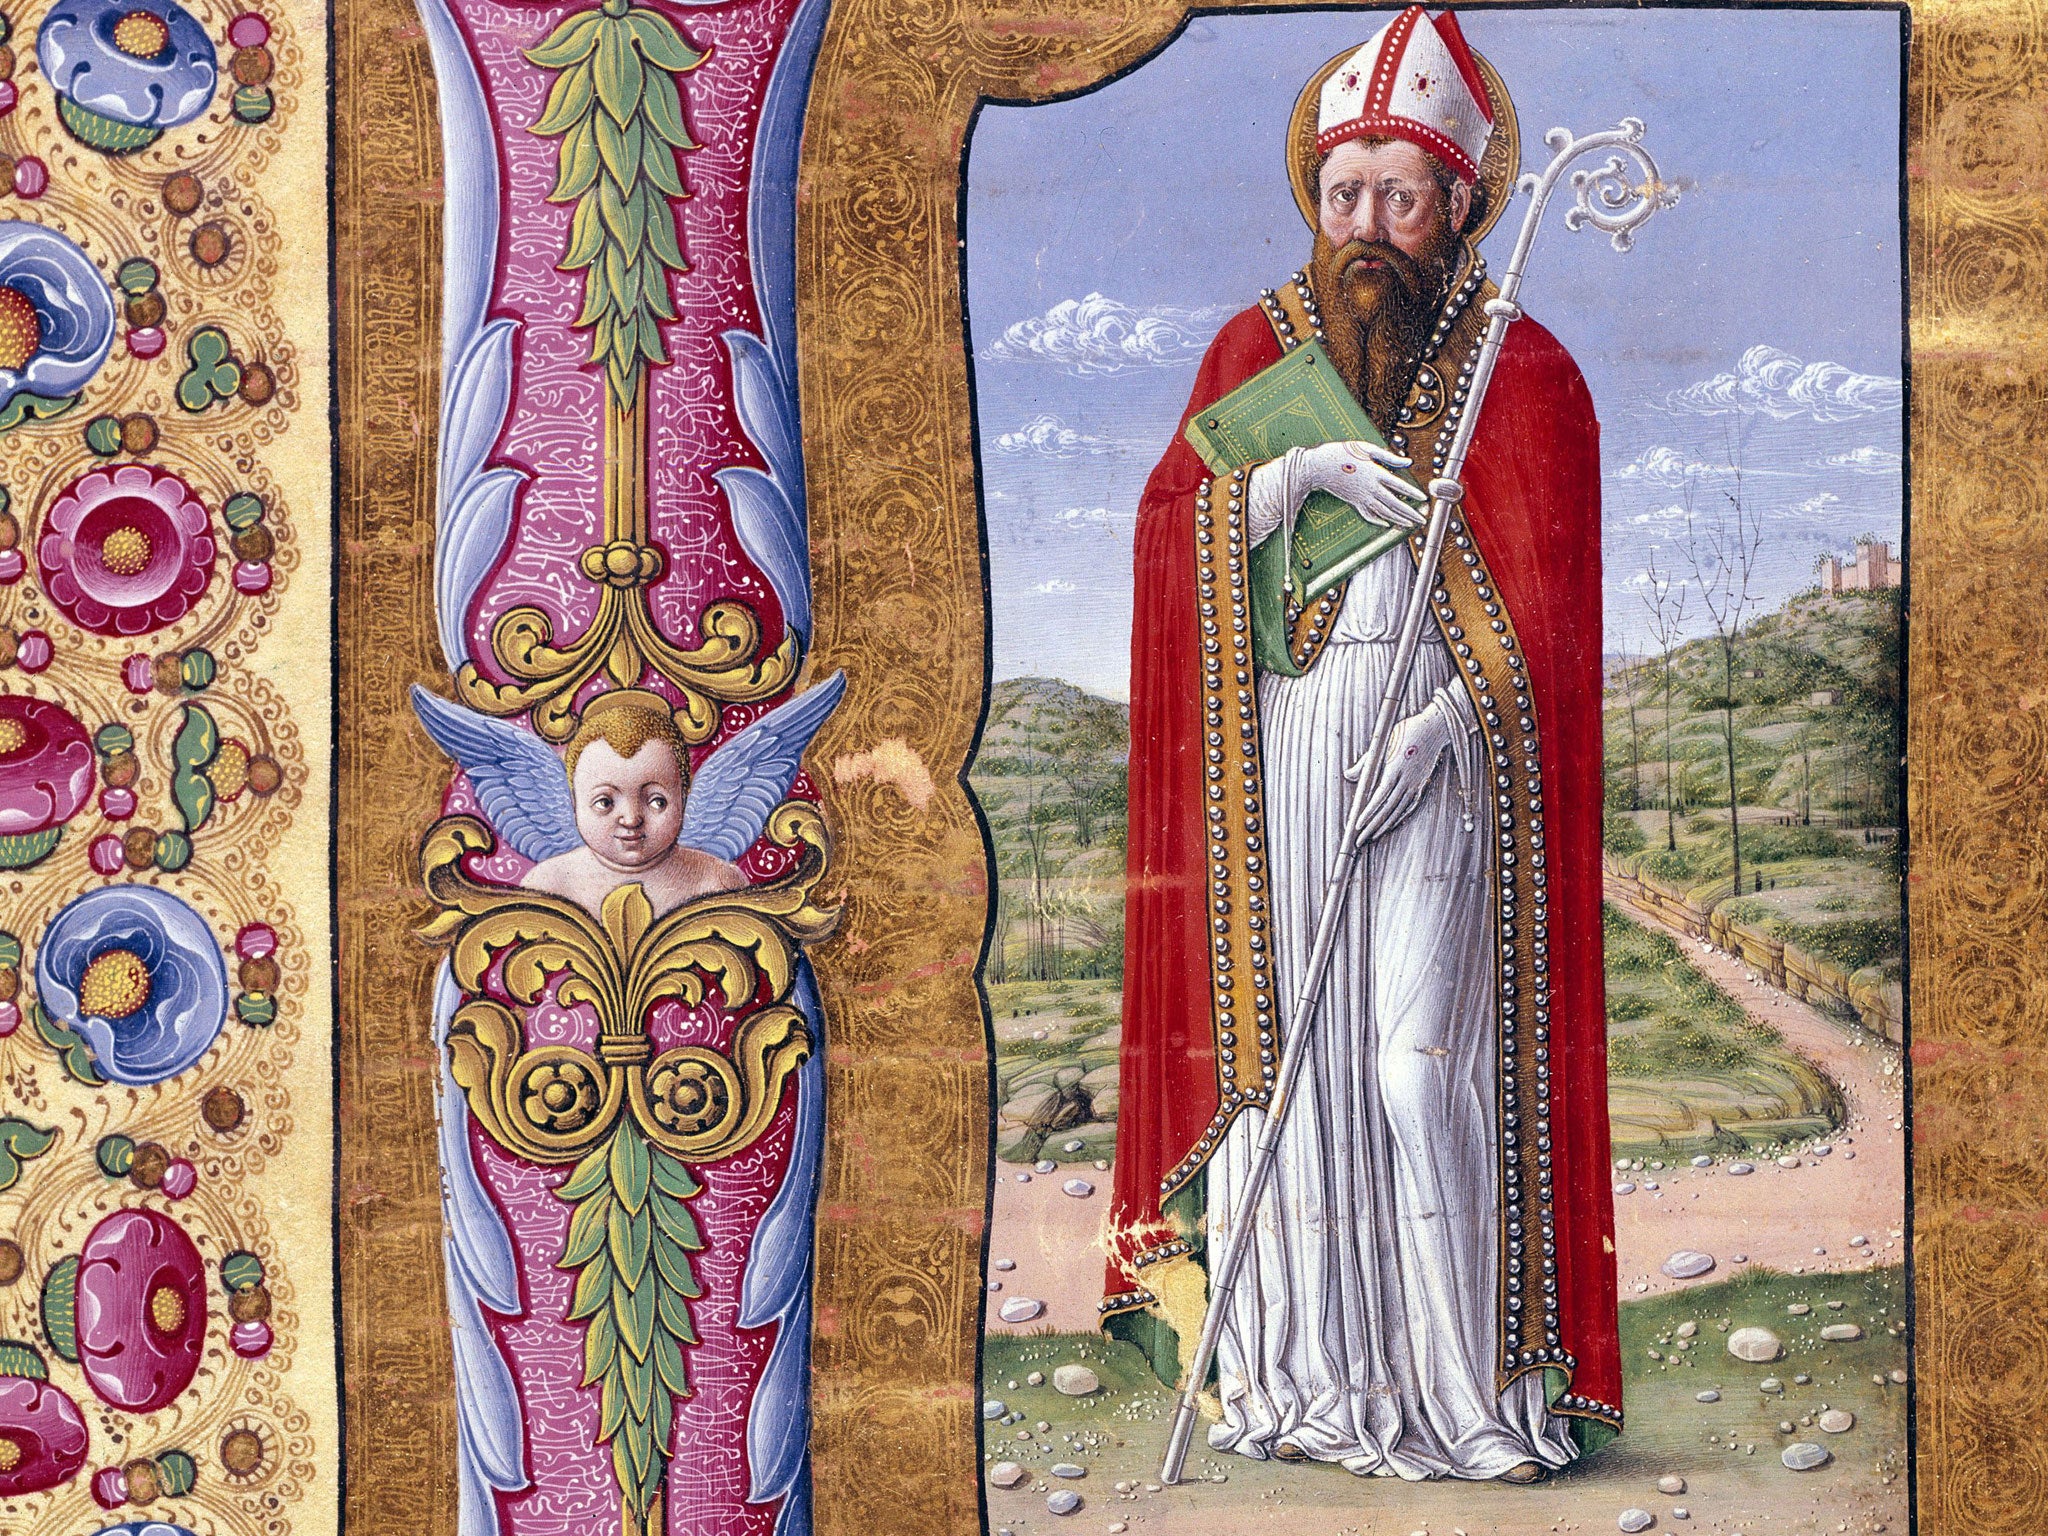 Dedicated scholarship: St. Augustine, by Girolamo da Cremona, 15th Century illumination on vellum paper